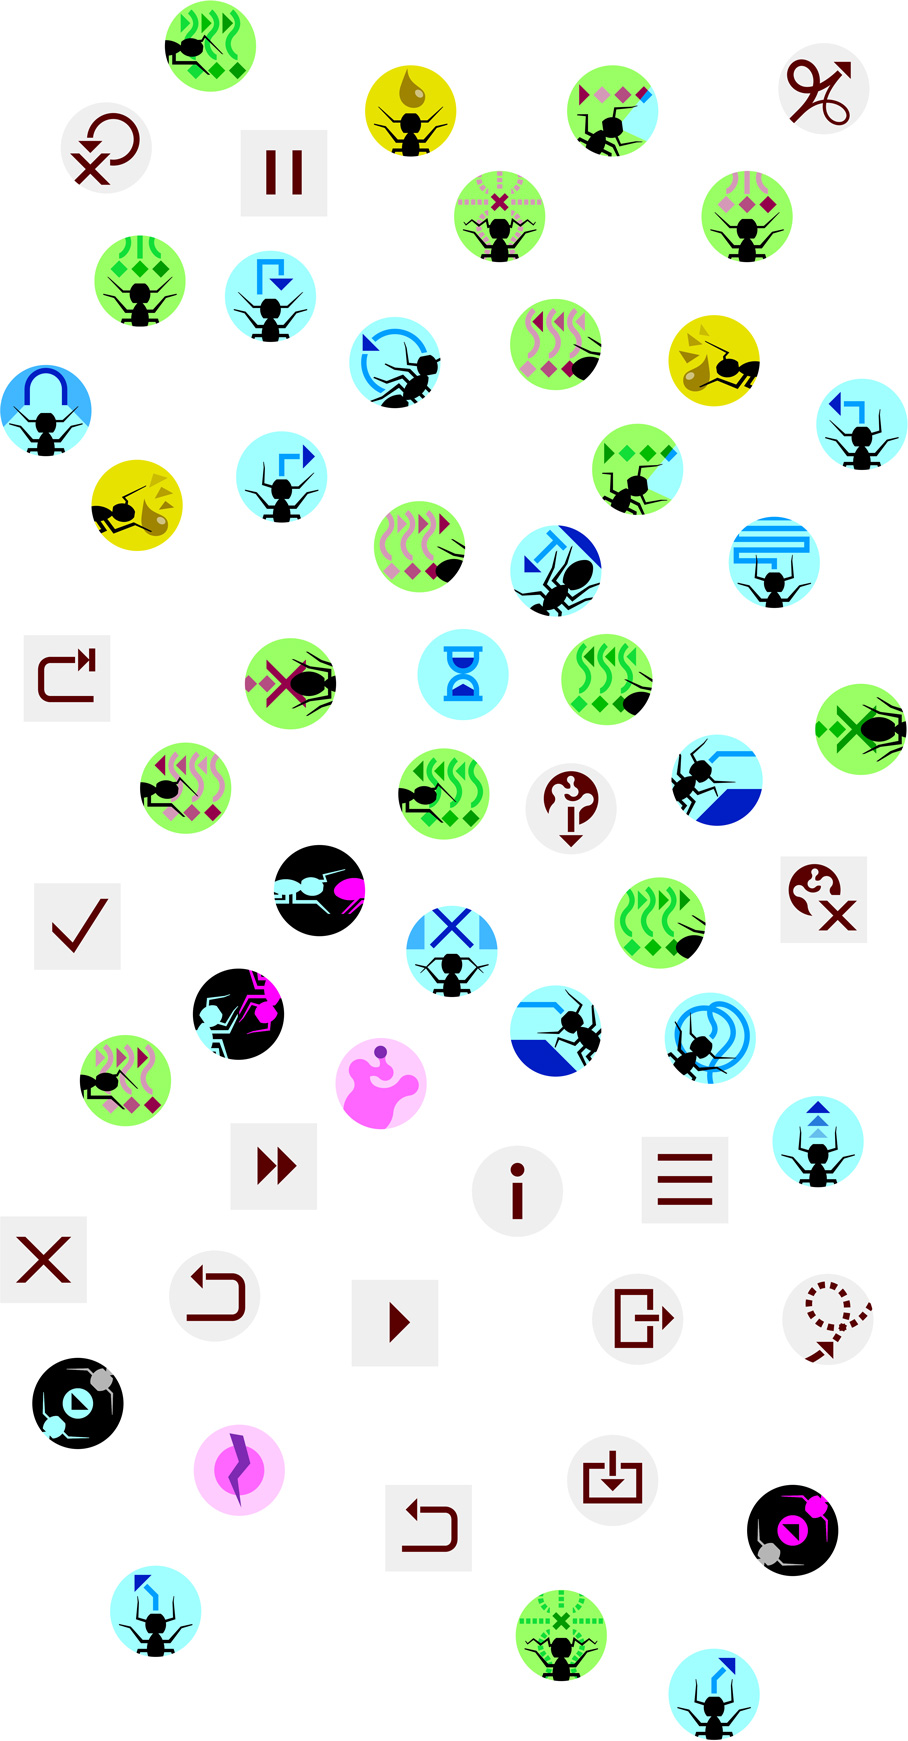 Ant mobile game: Icon design.